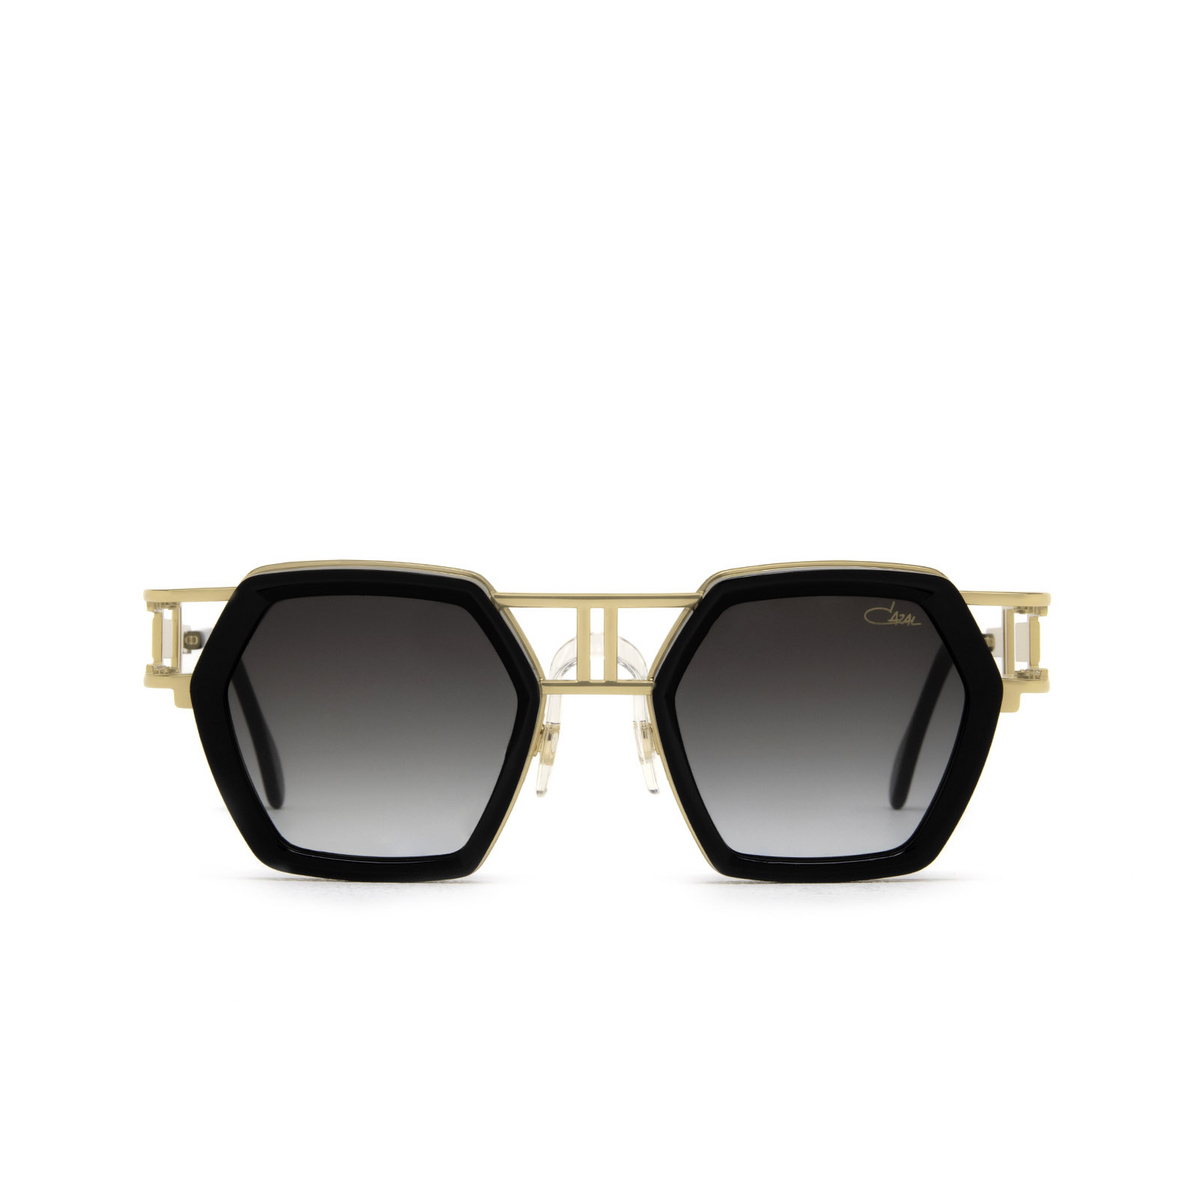 Cazal 677 Sunglasses 001 Black - Gold - front view